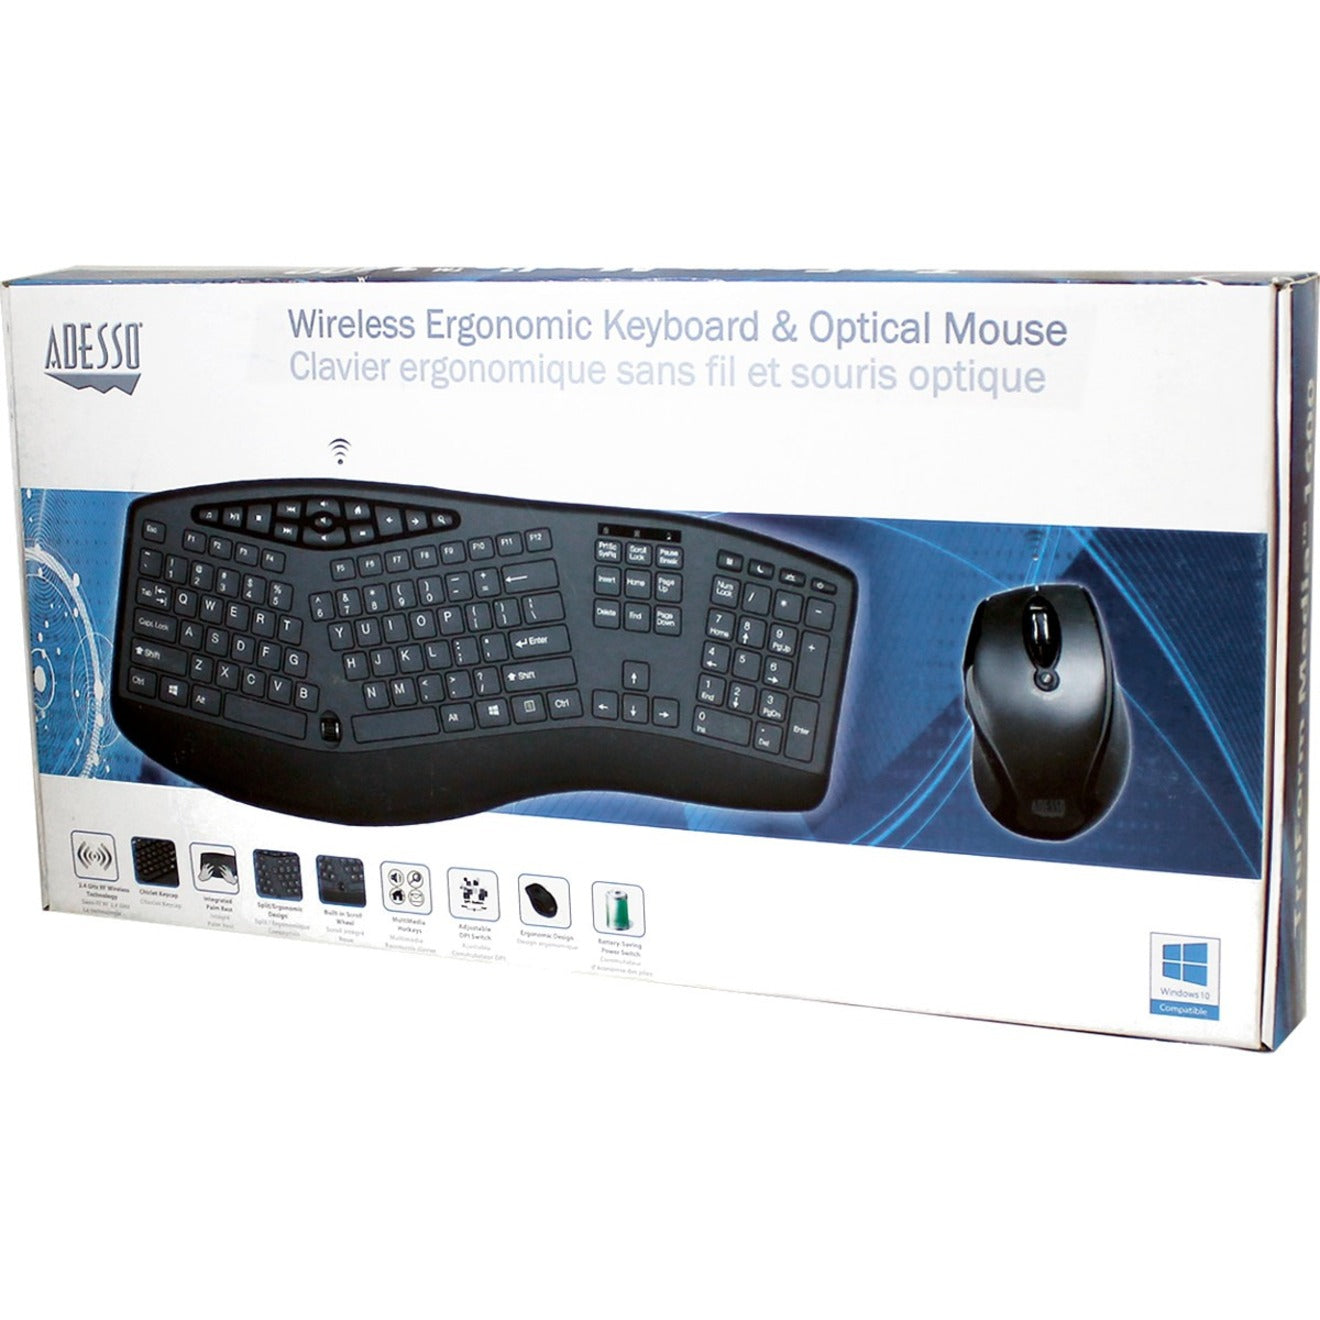 Adesso WKB-1600CB TruForm Wireless Ergonomic Keyboard And Optical Mouse, Low-Profile Keys, Split Keyboard, Palm Rest, Ergonomic